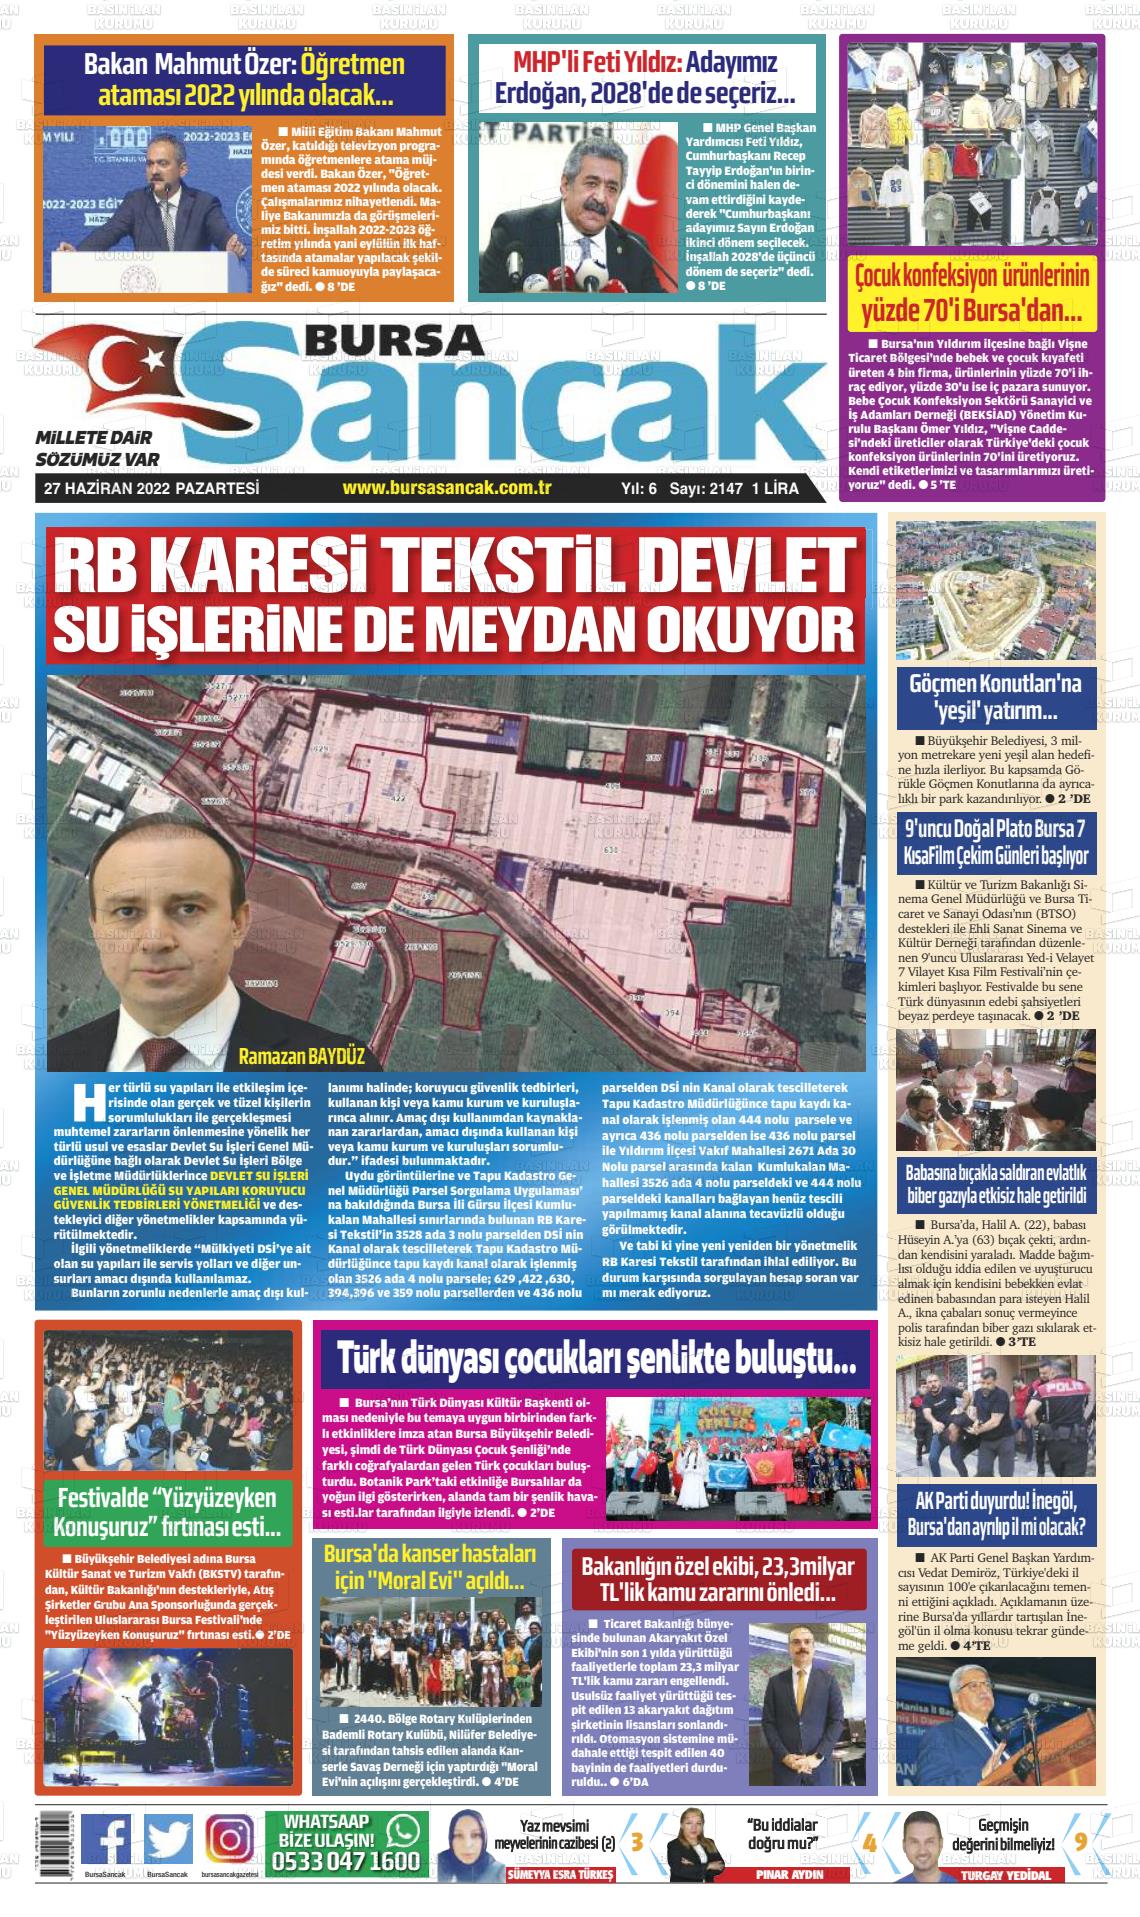 27 Haziran 2022 Bursa Sancak Gazete Manşeti